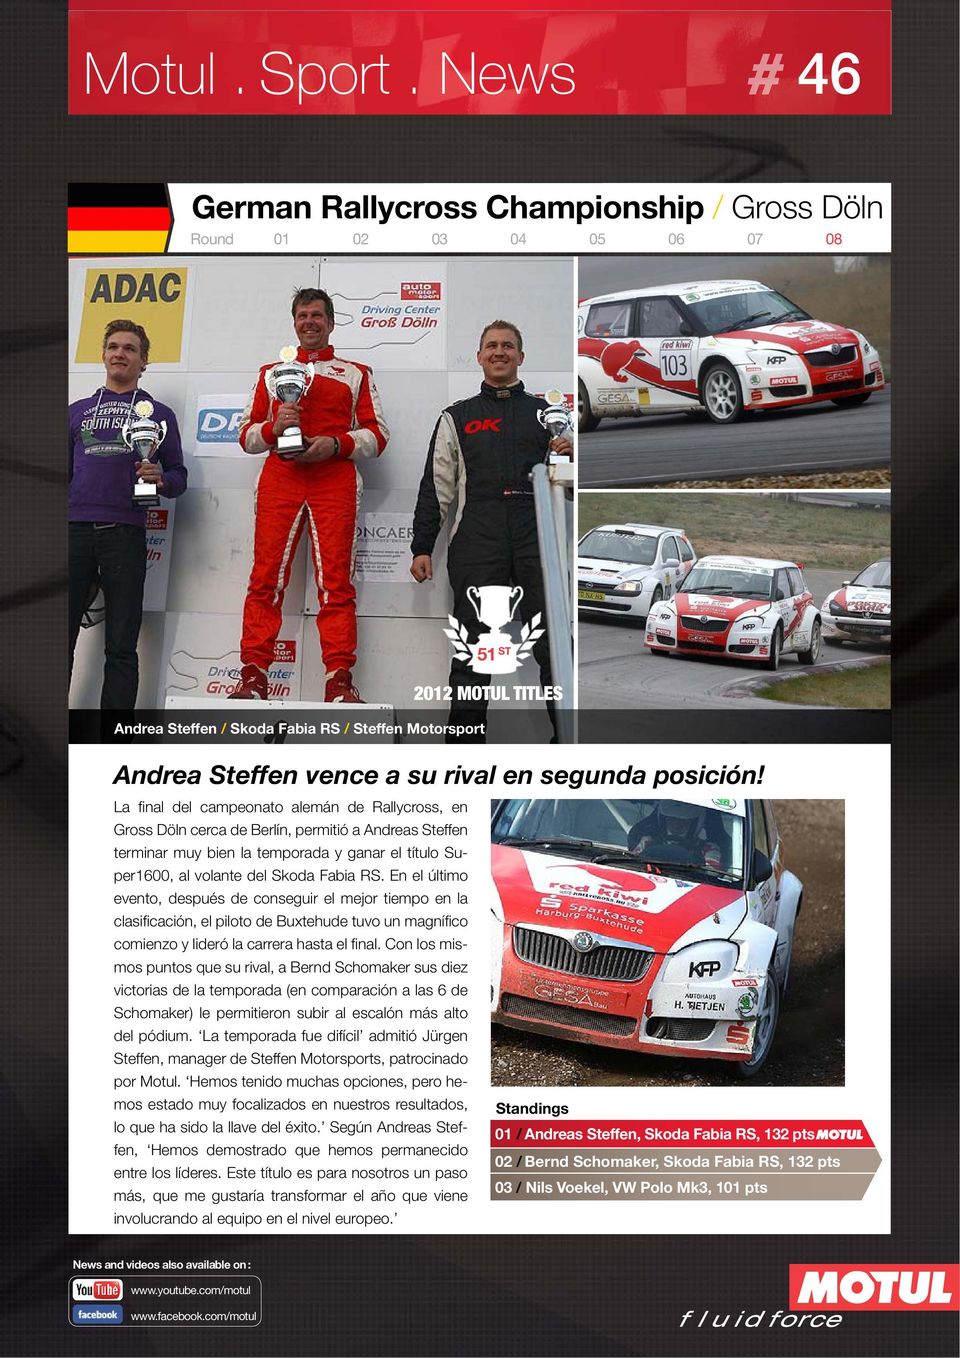 Steffen, manager de Steffen Motorsports, patrocinado - - Standings 01 / Andreas Steffen, Skoda